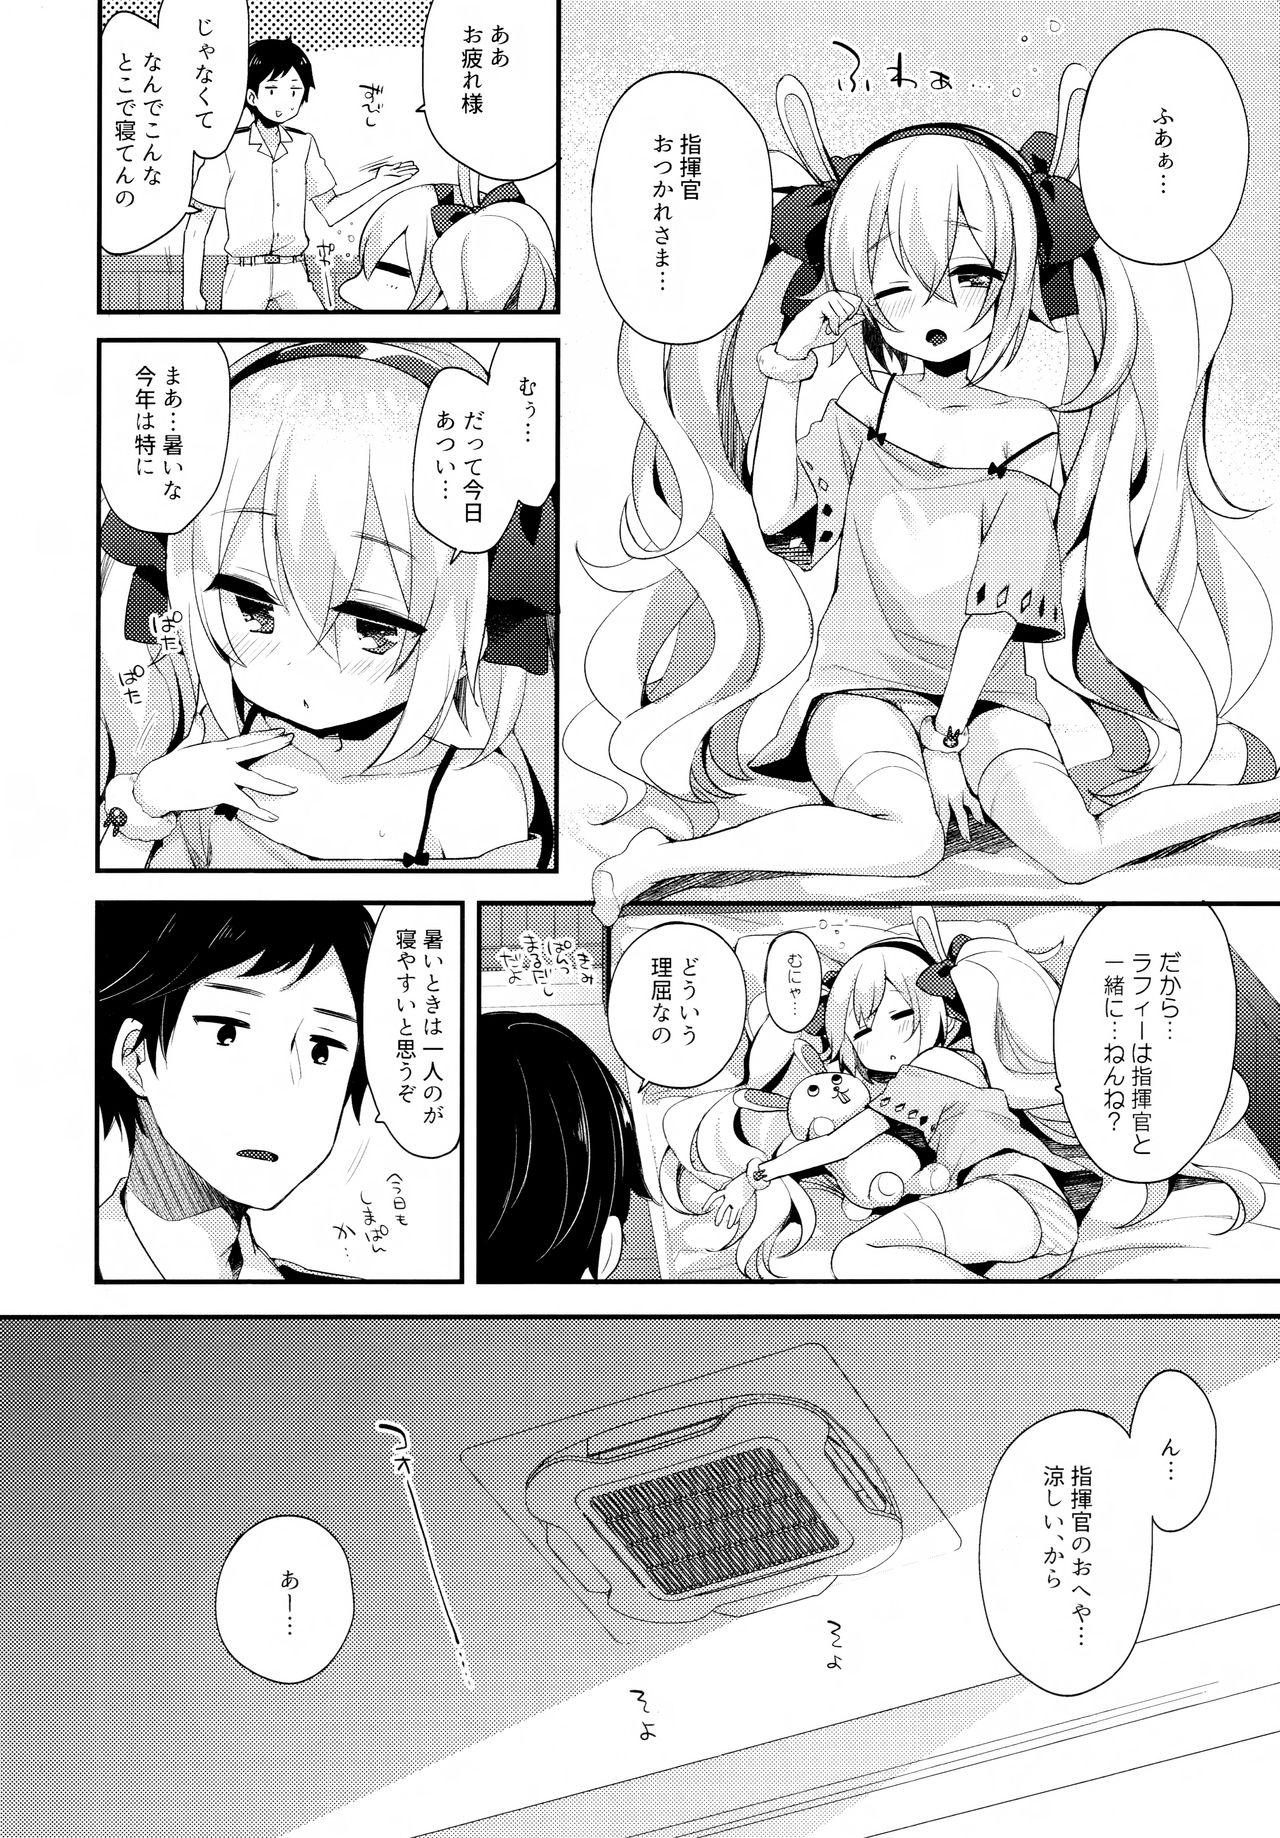 Prostituta Shikikan, Kyou wa Atsui kara Laffey to Nenne... Shiyo? - Azur lane Pounded - Page 5